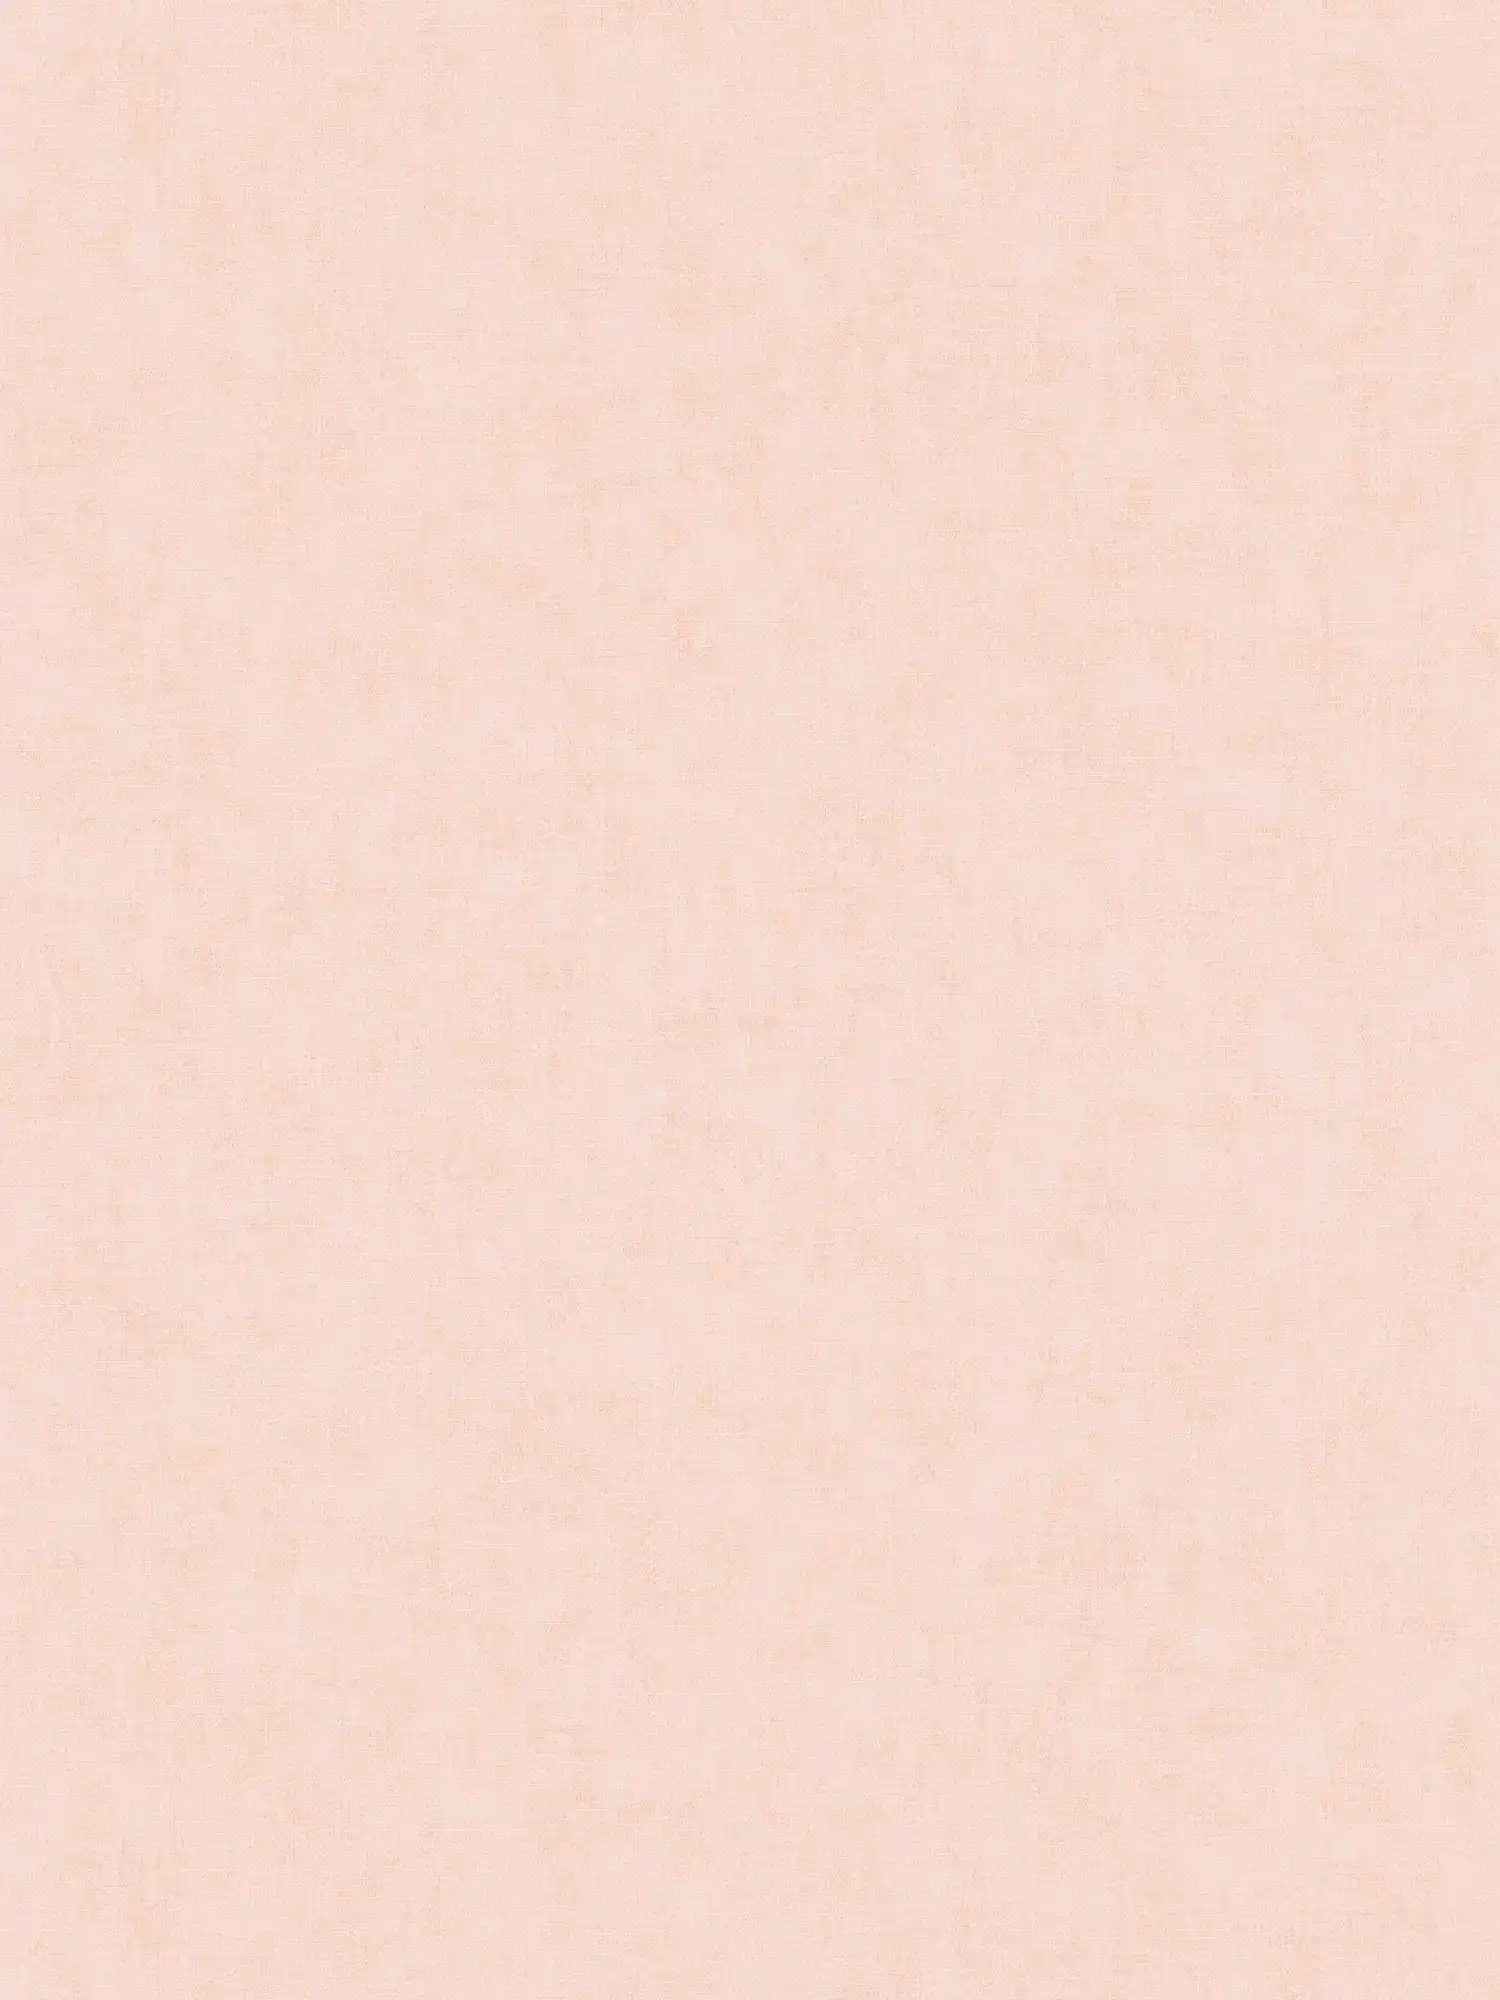 Scandinavian style plain wallpaper with linen look - pink
